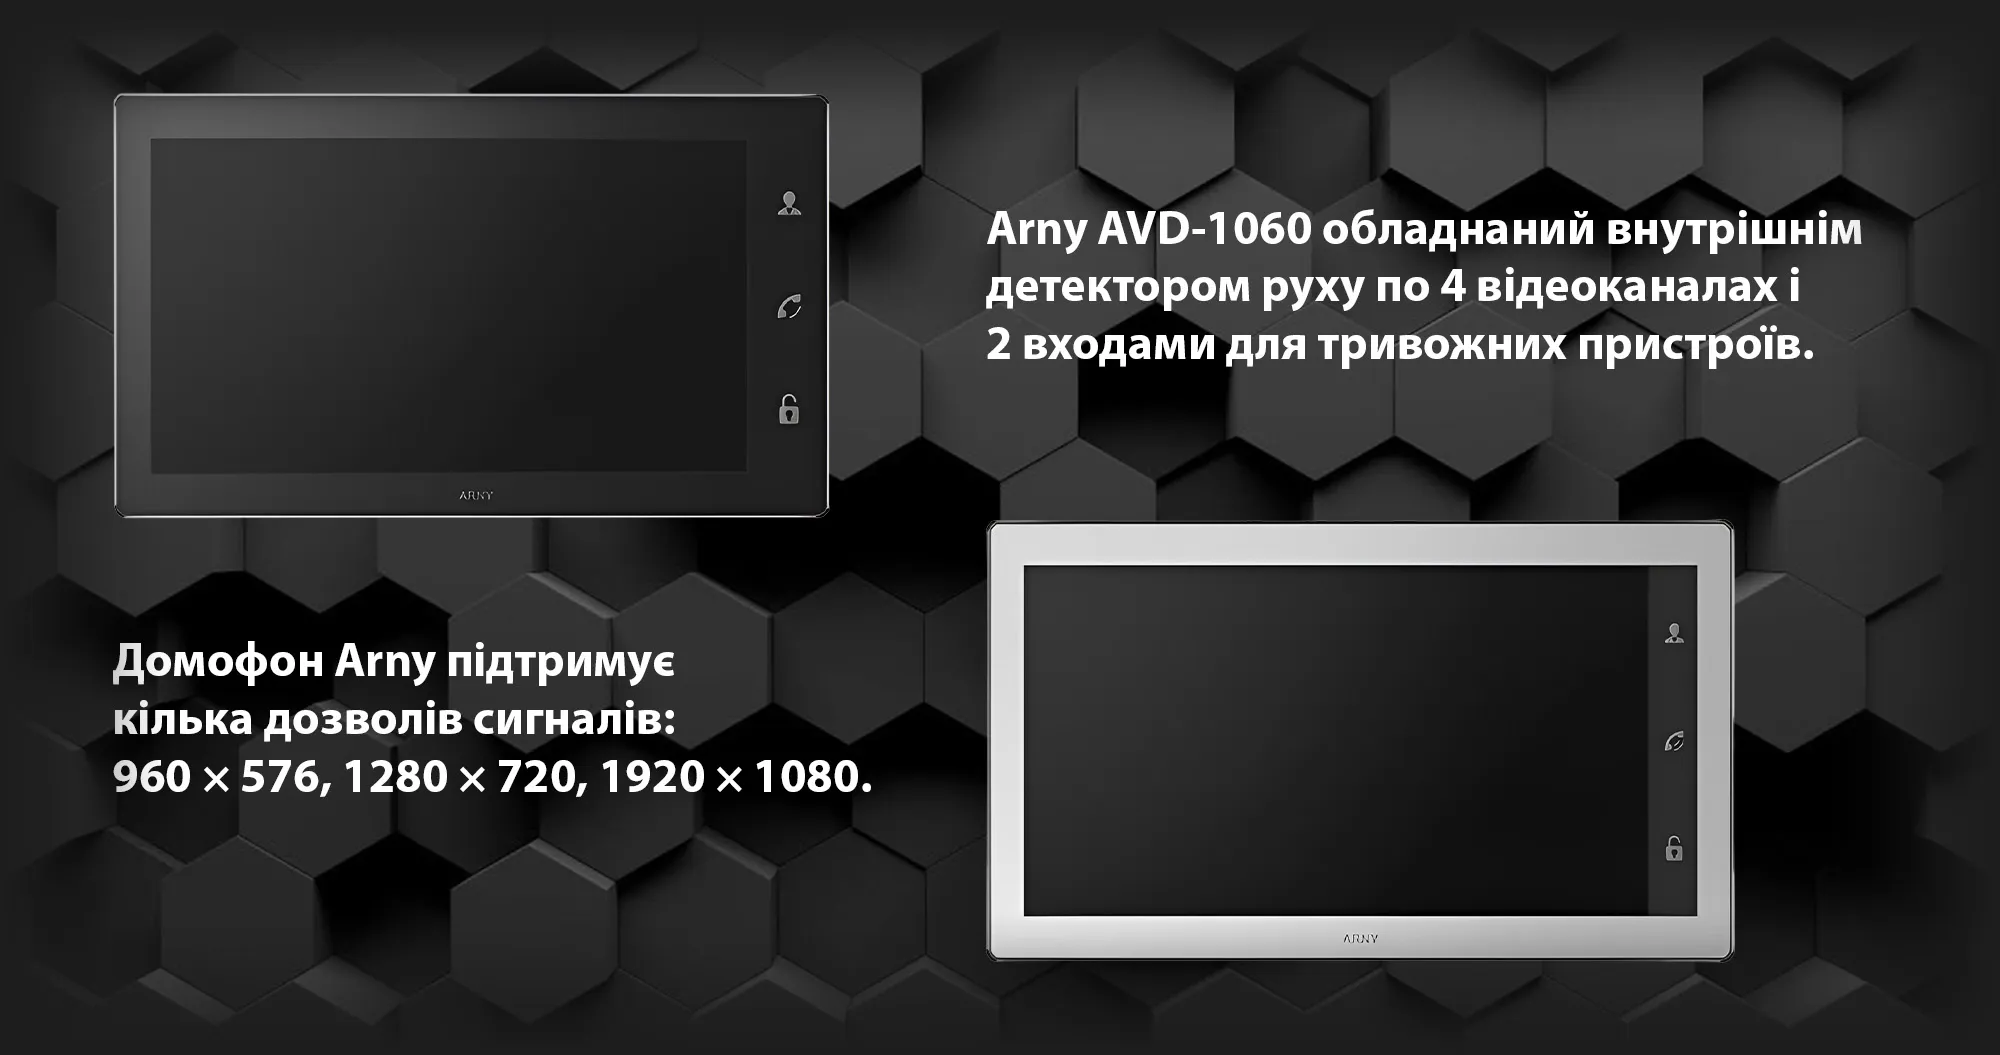 Видеодомофон Arny AVD-1060 2MPX WiFI (White)